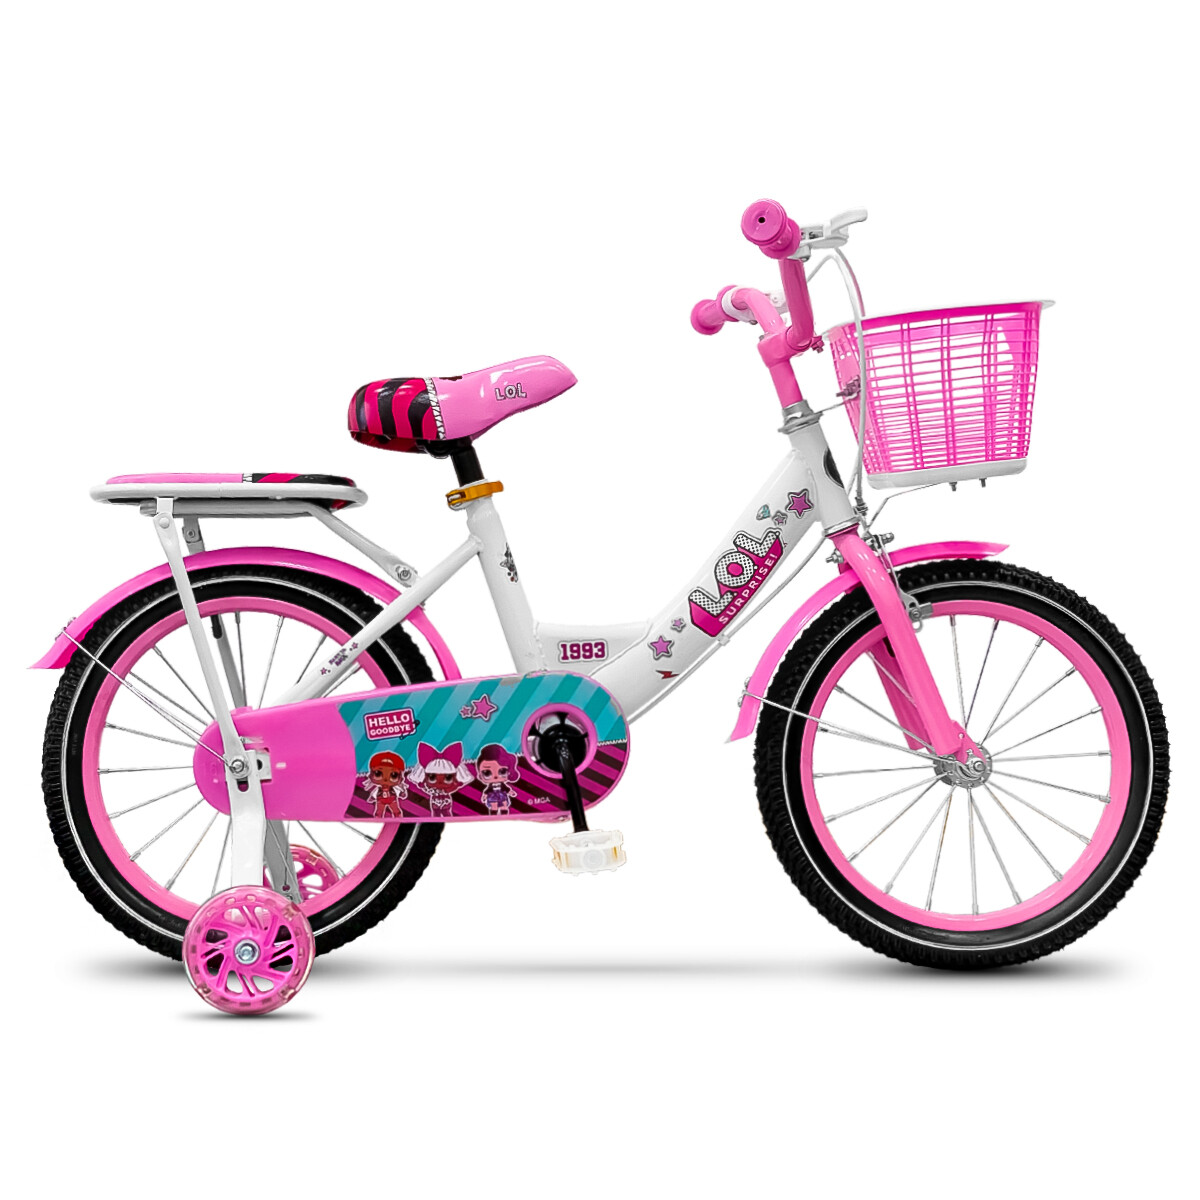 Bicicleta Lol Rod 16 C/ Canasto + Rueditas Armadas - Rosa 